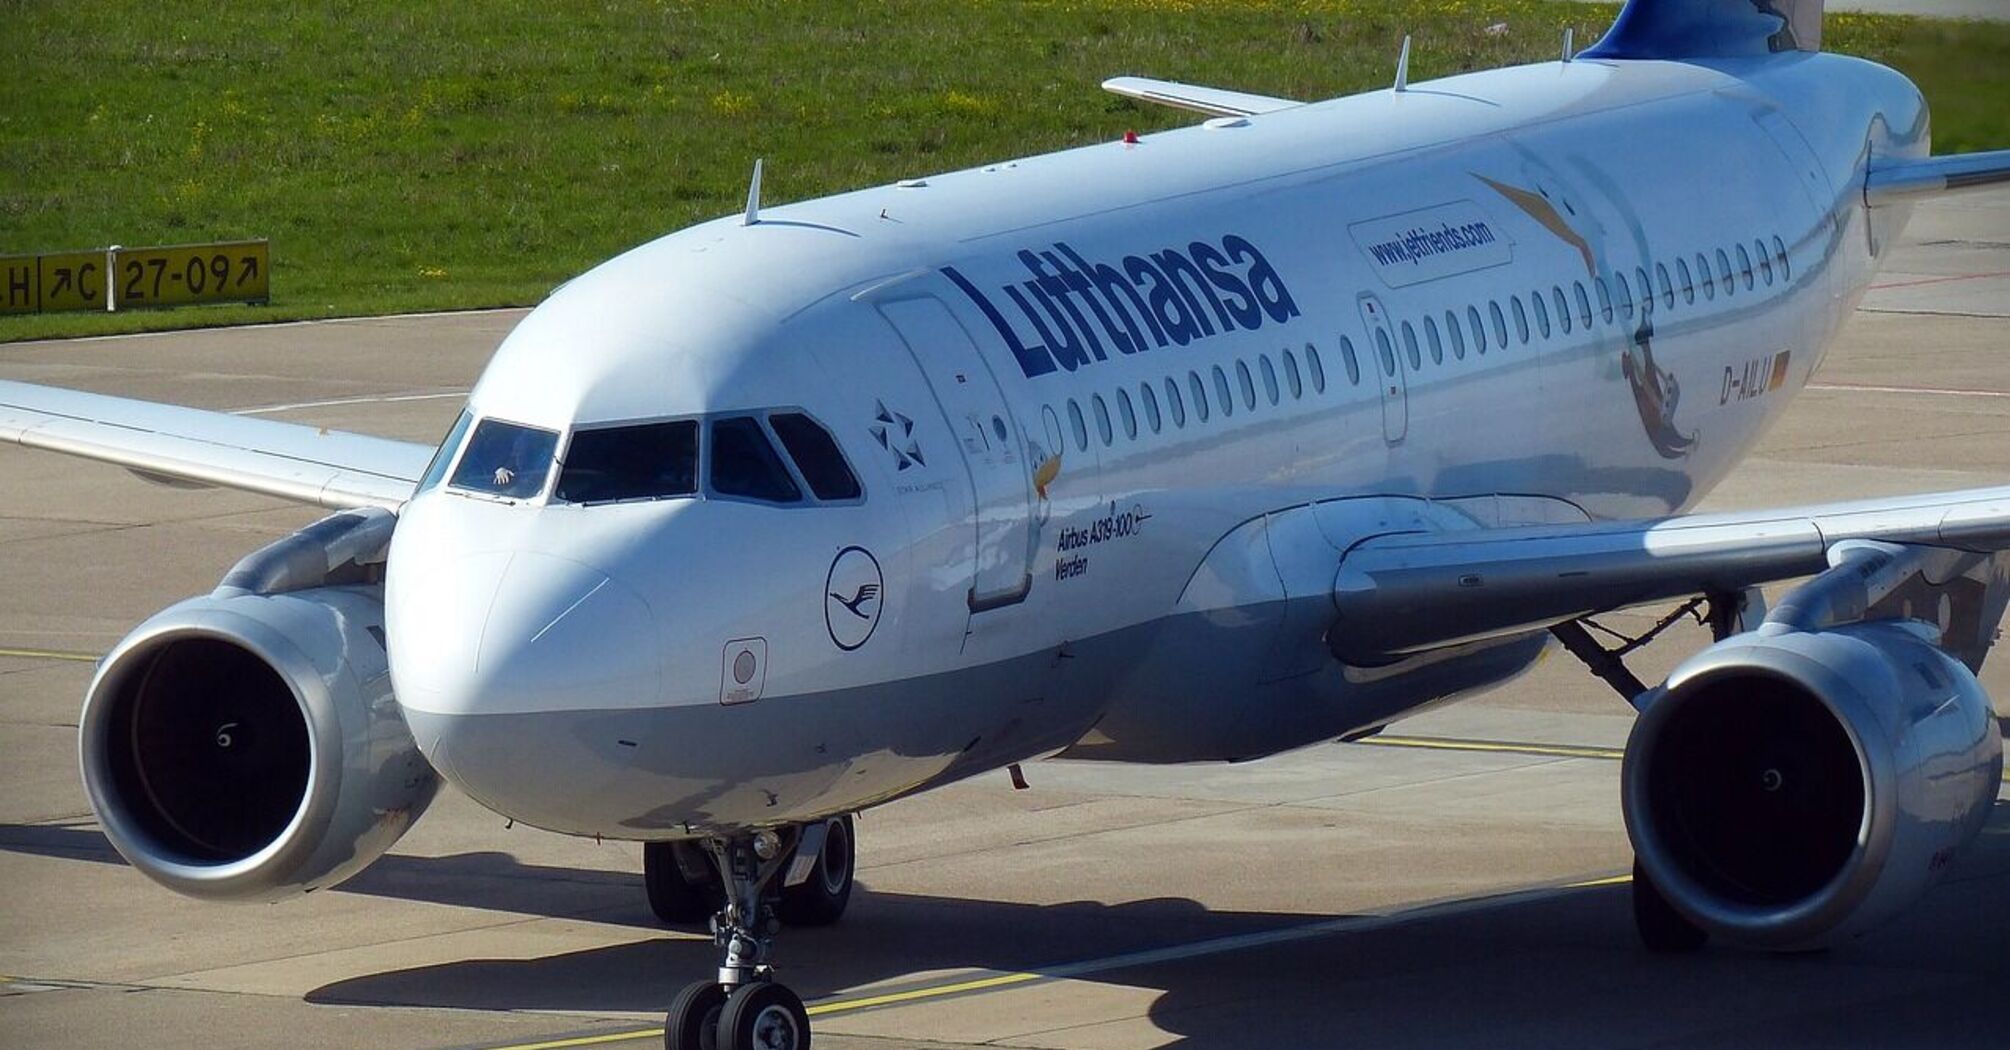 A truck crashed into a Lufthansa plane at Frankfurt Airport